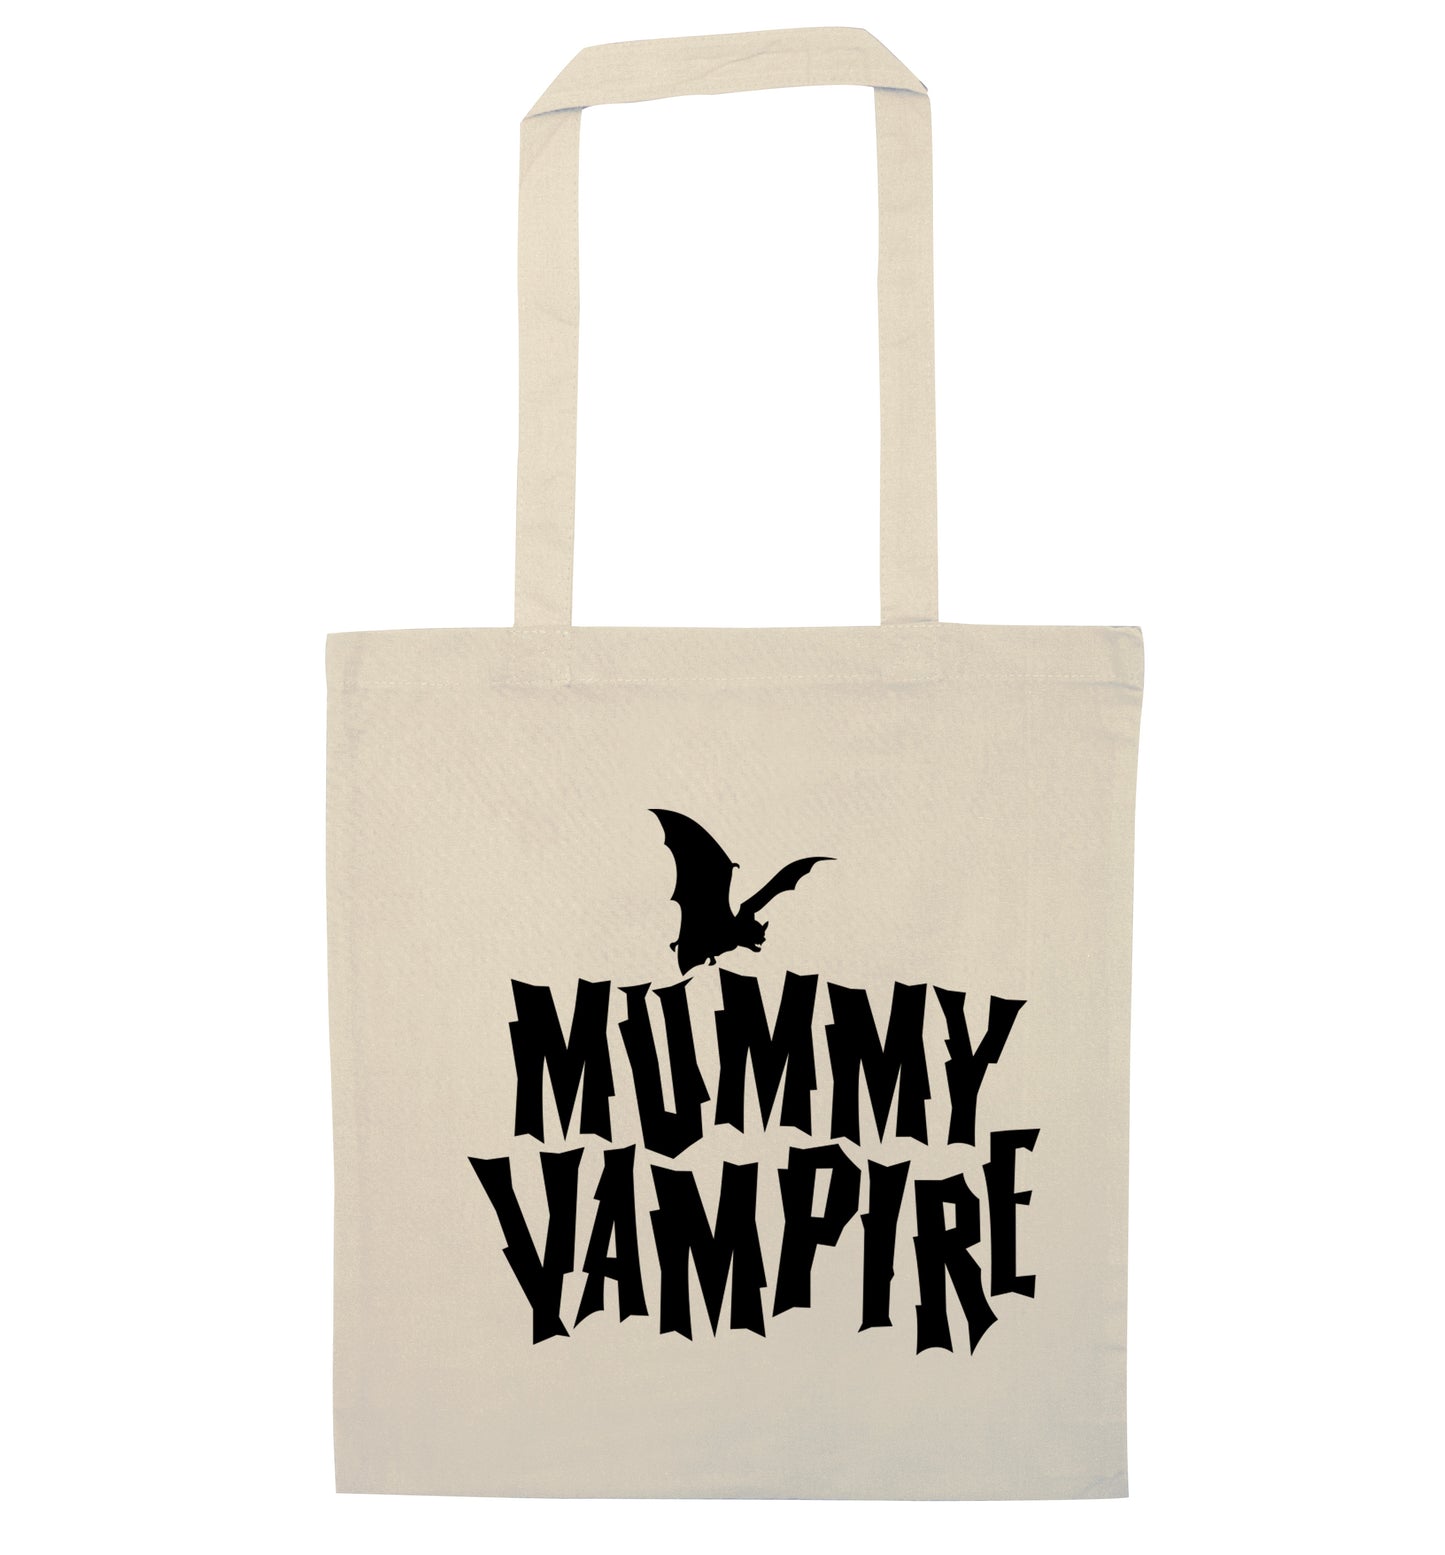 Mummy vampire natural tote bag